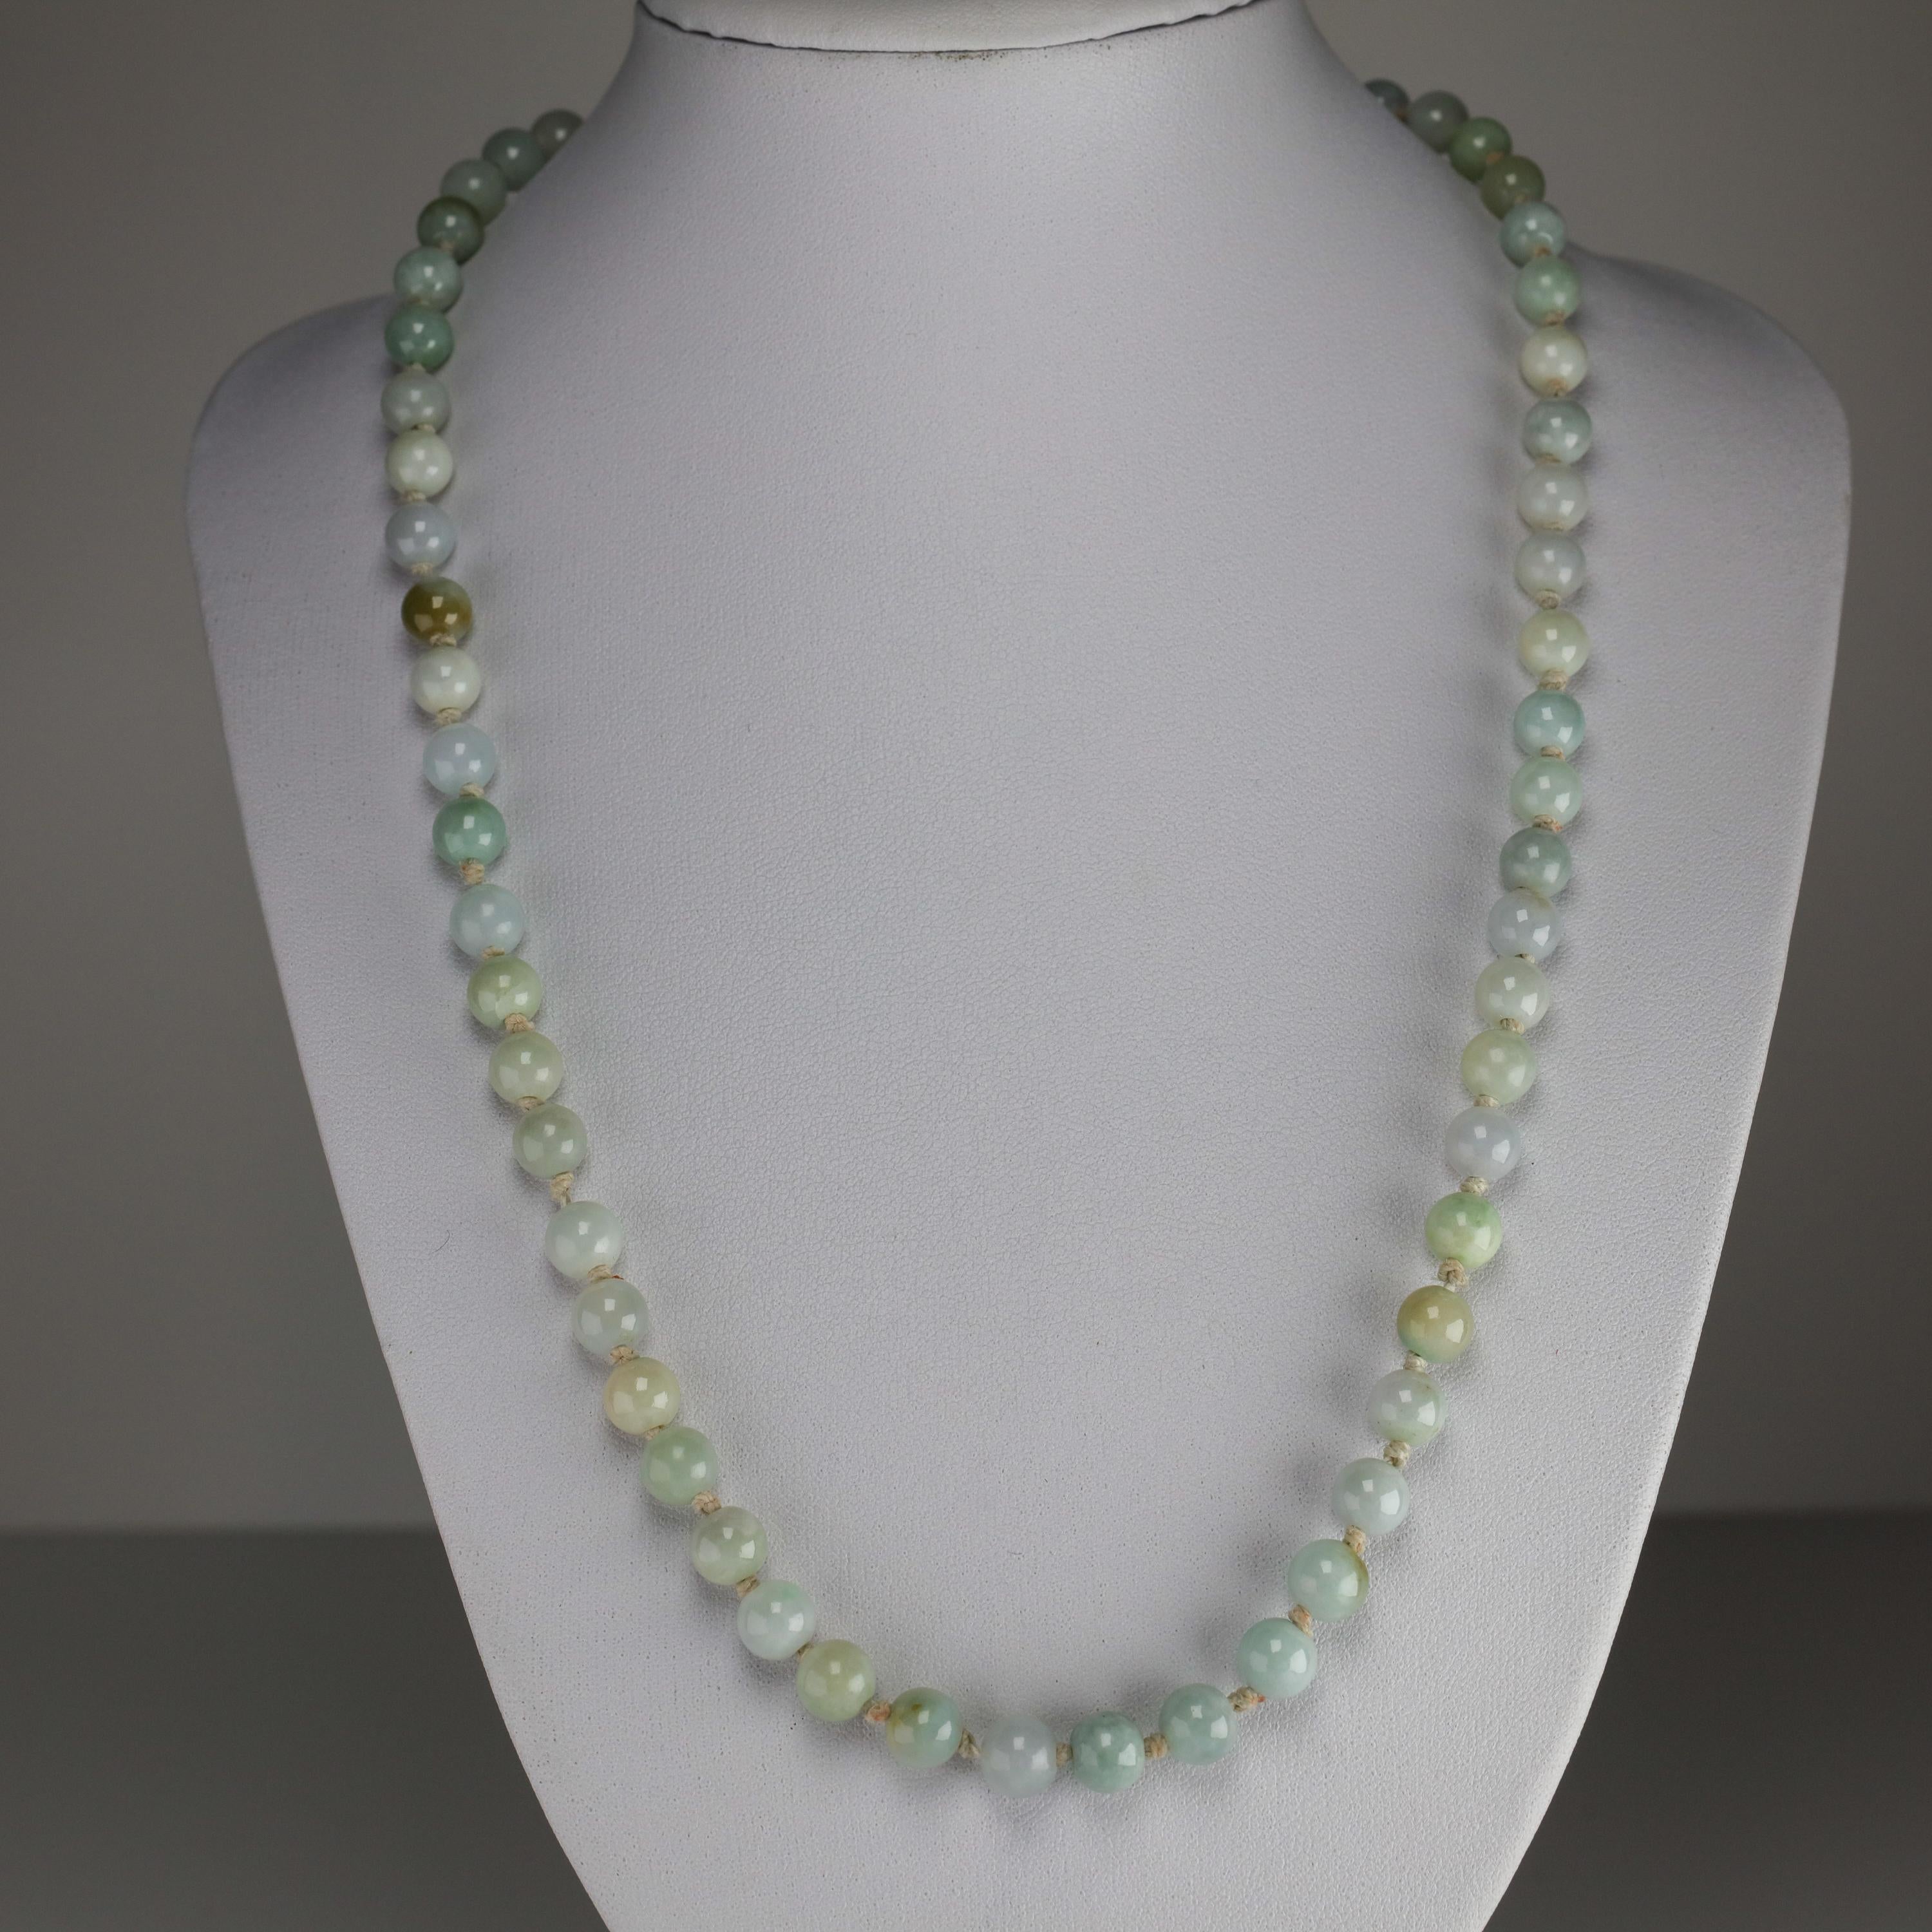 Antique Jade Necklace in Faint, Breathtaking Colors 11